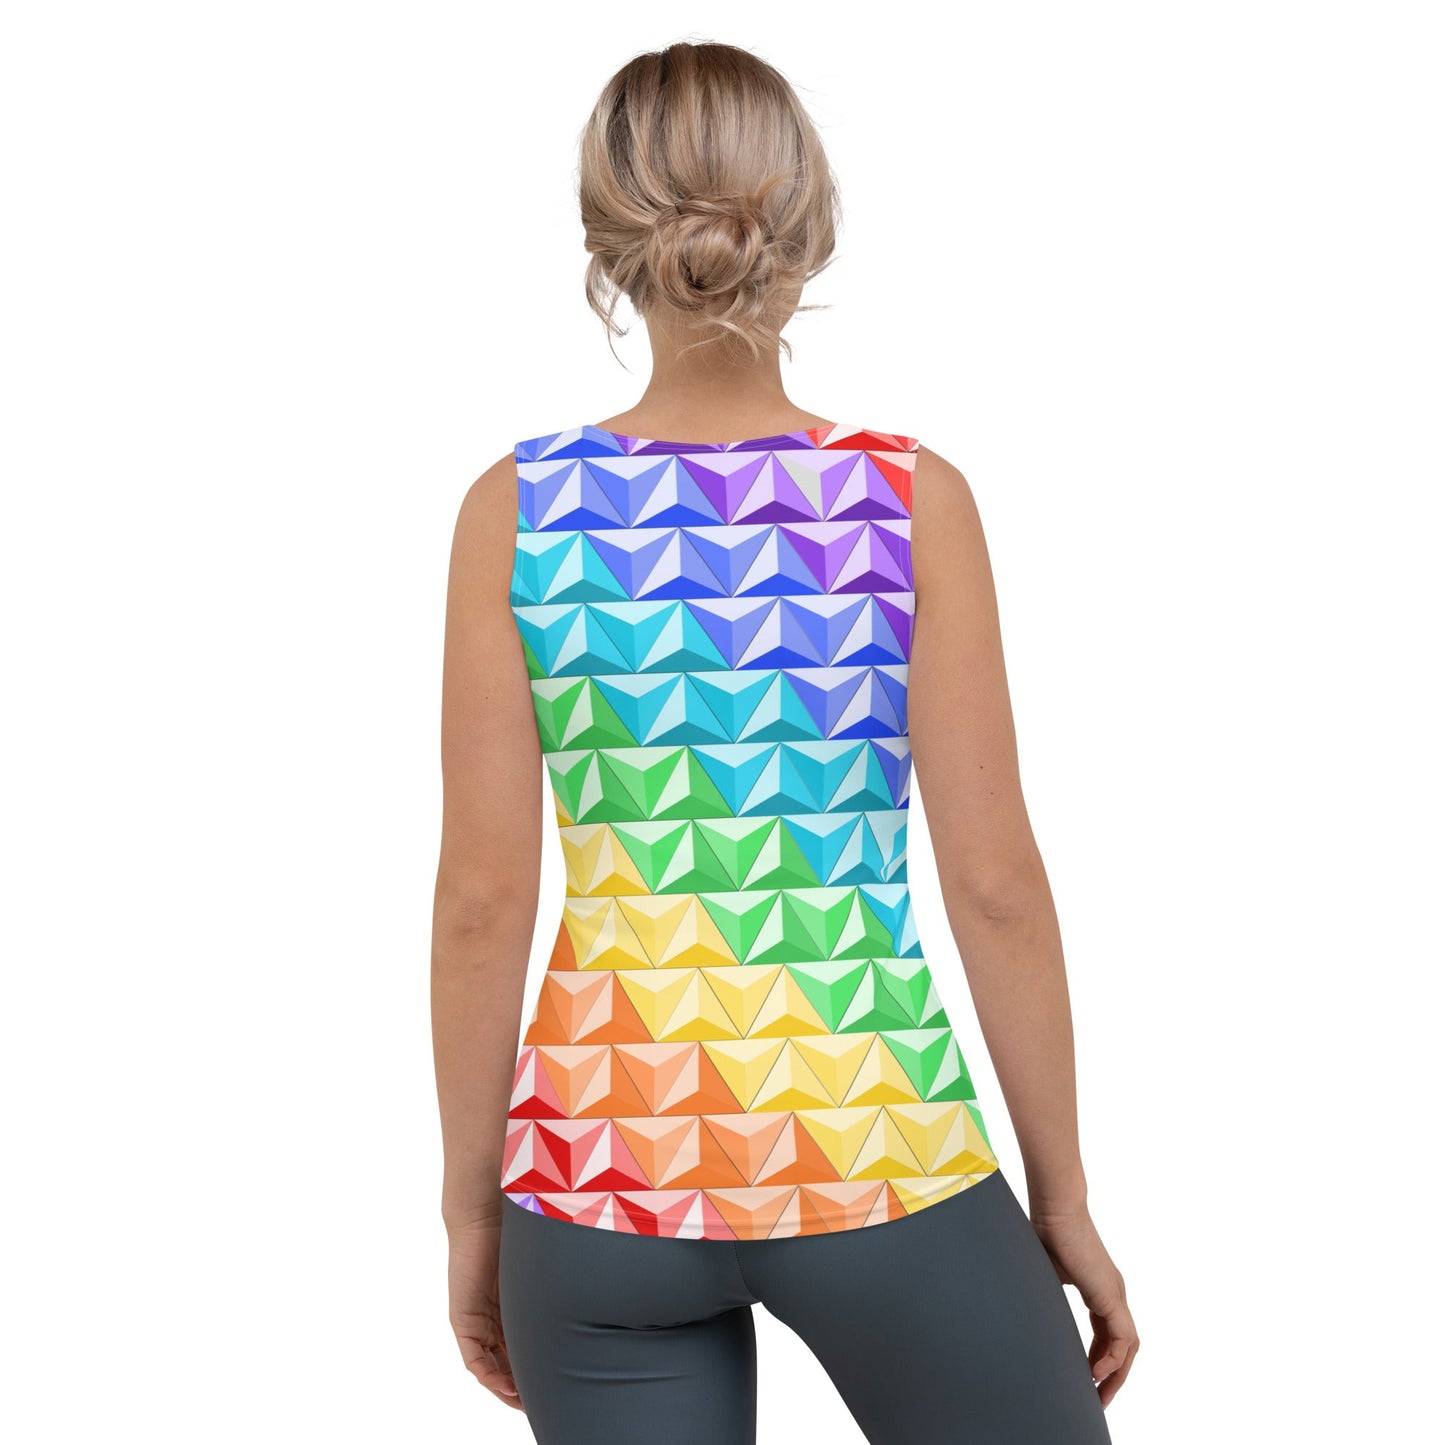 Rainbow World of Tomorrow Tank Top active wearcalifornia adventureclothing#tag4##tag5##tag6#